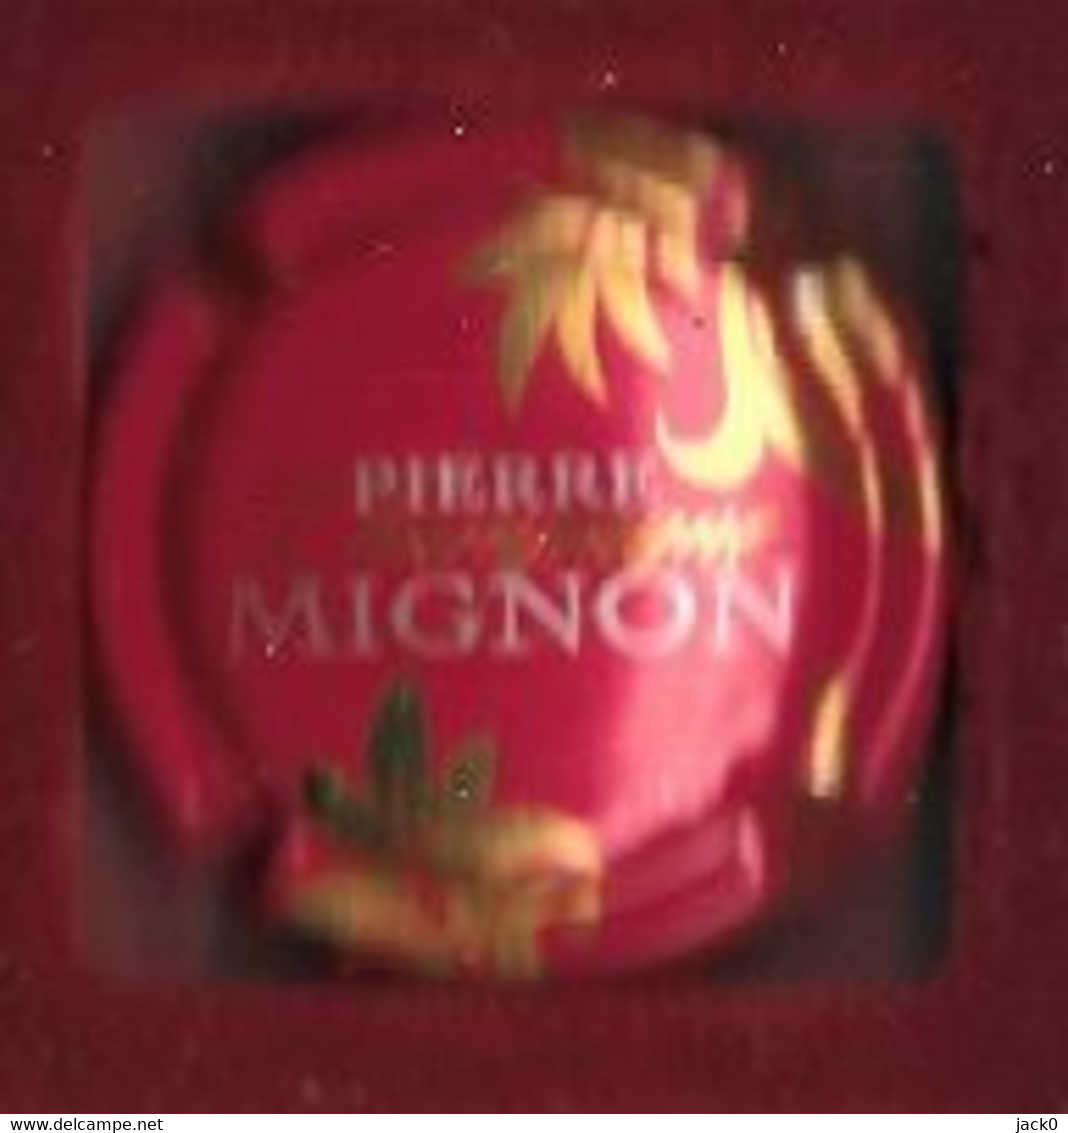 Boisson, Capsule De Champagne  Rouge  PIERRE  MIGNON - Mignon, Pierre